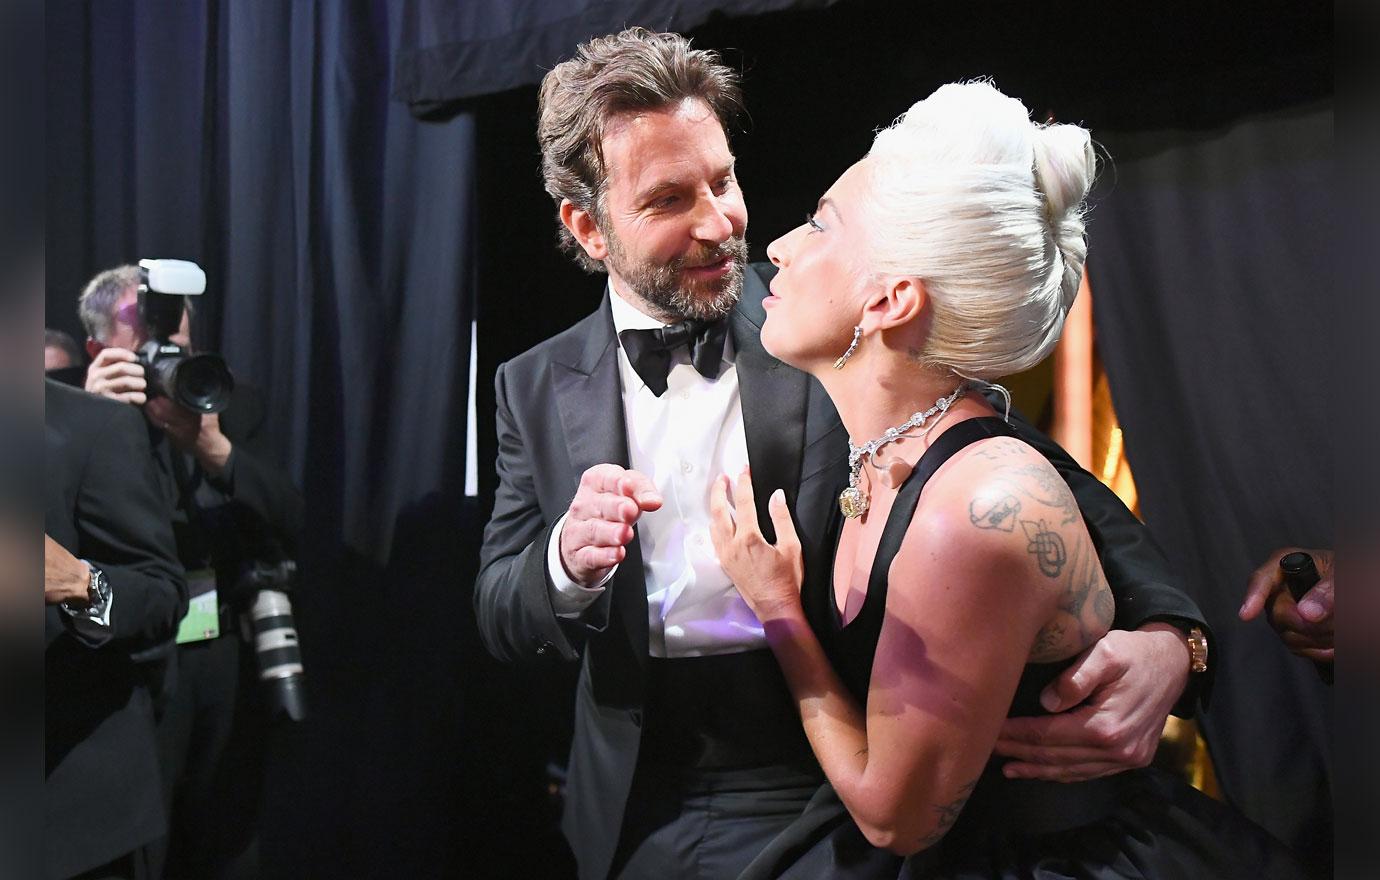 Bradley Cooper's Ex-Wife Jennifer Esposito Reacts to Lady Gaga Rumors